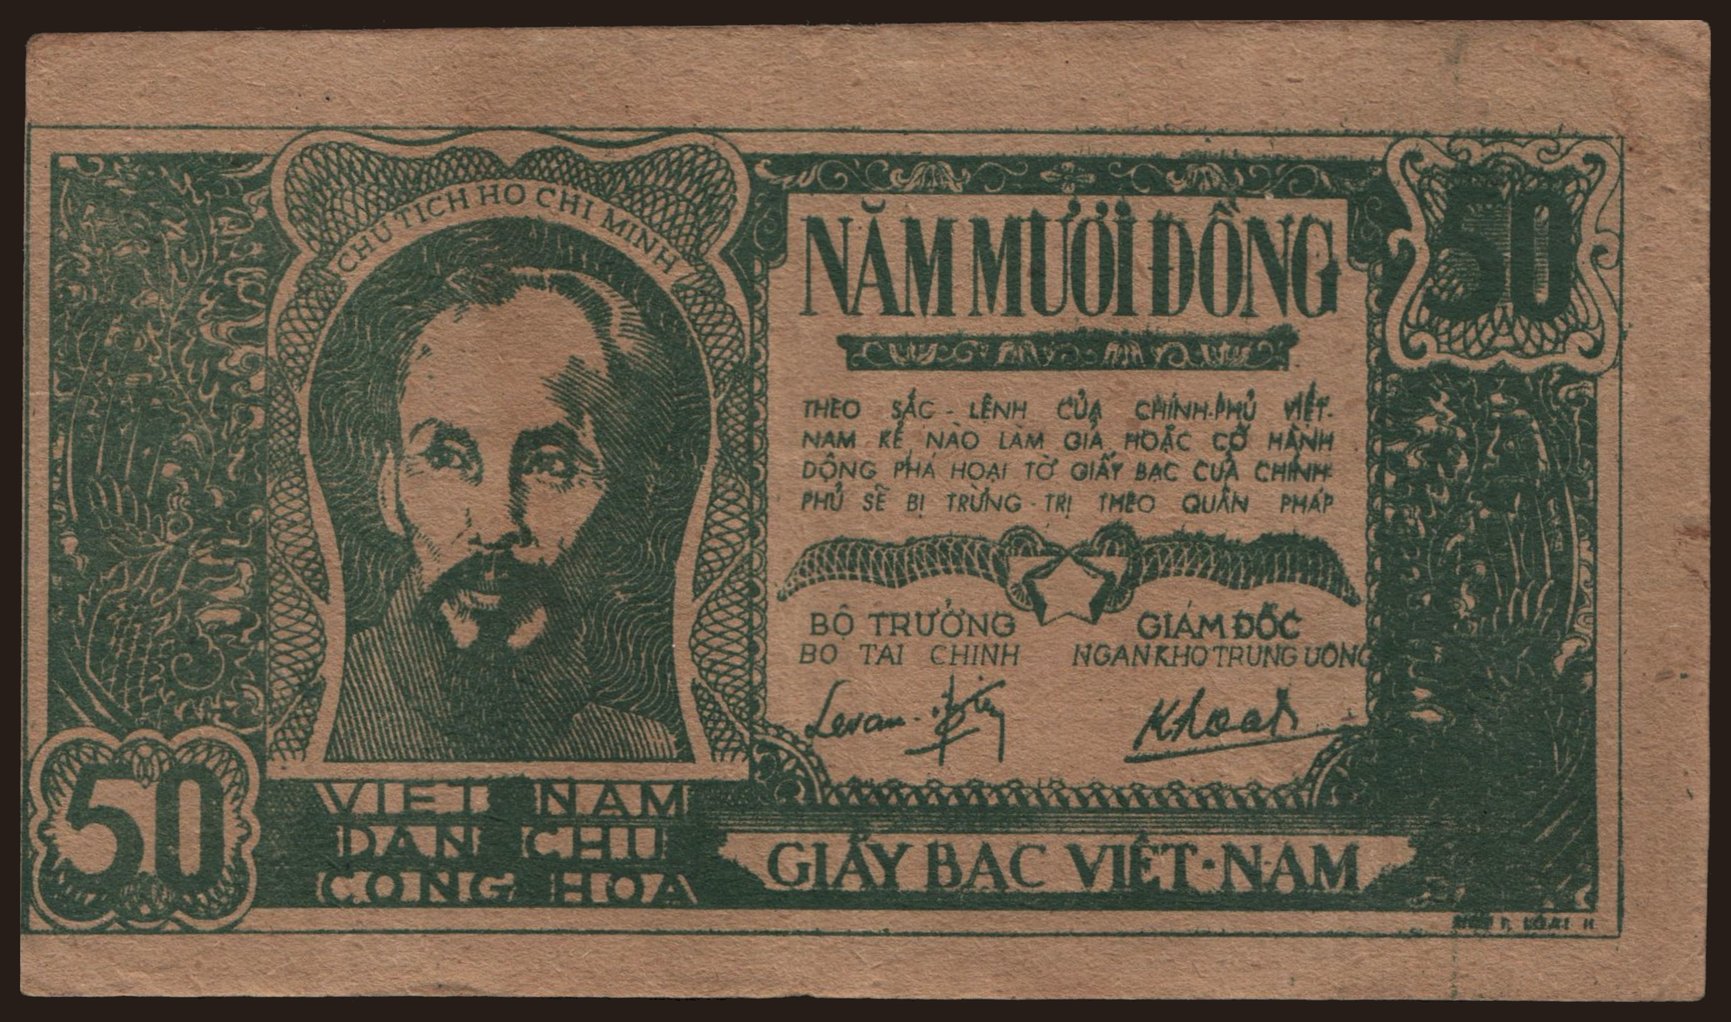 50 dong, 1948